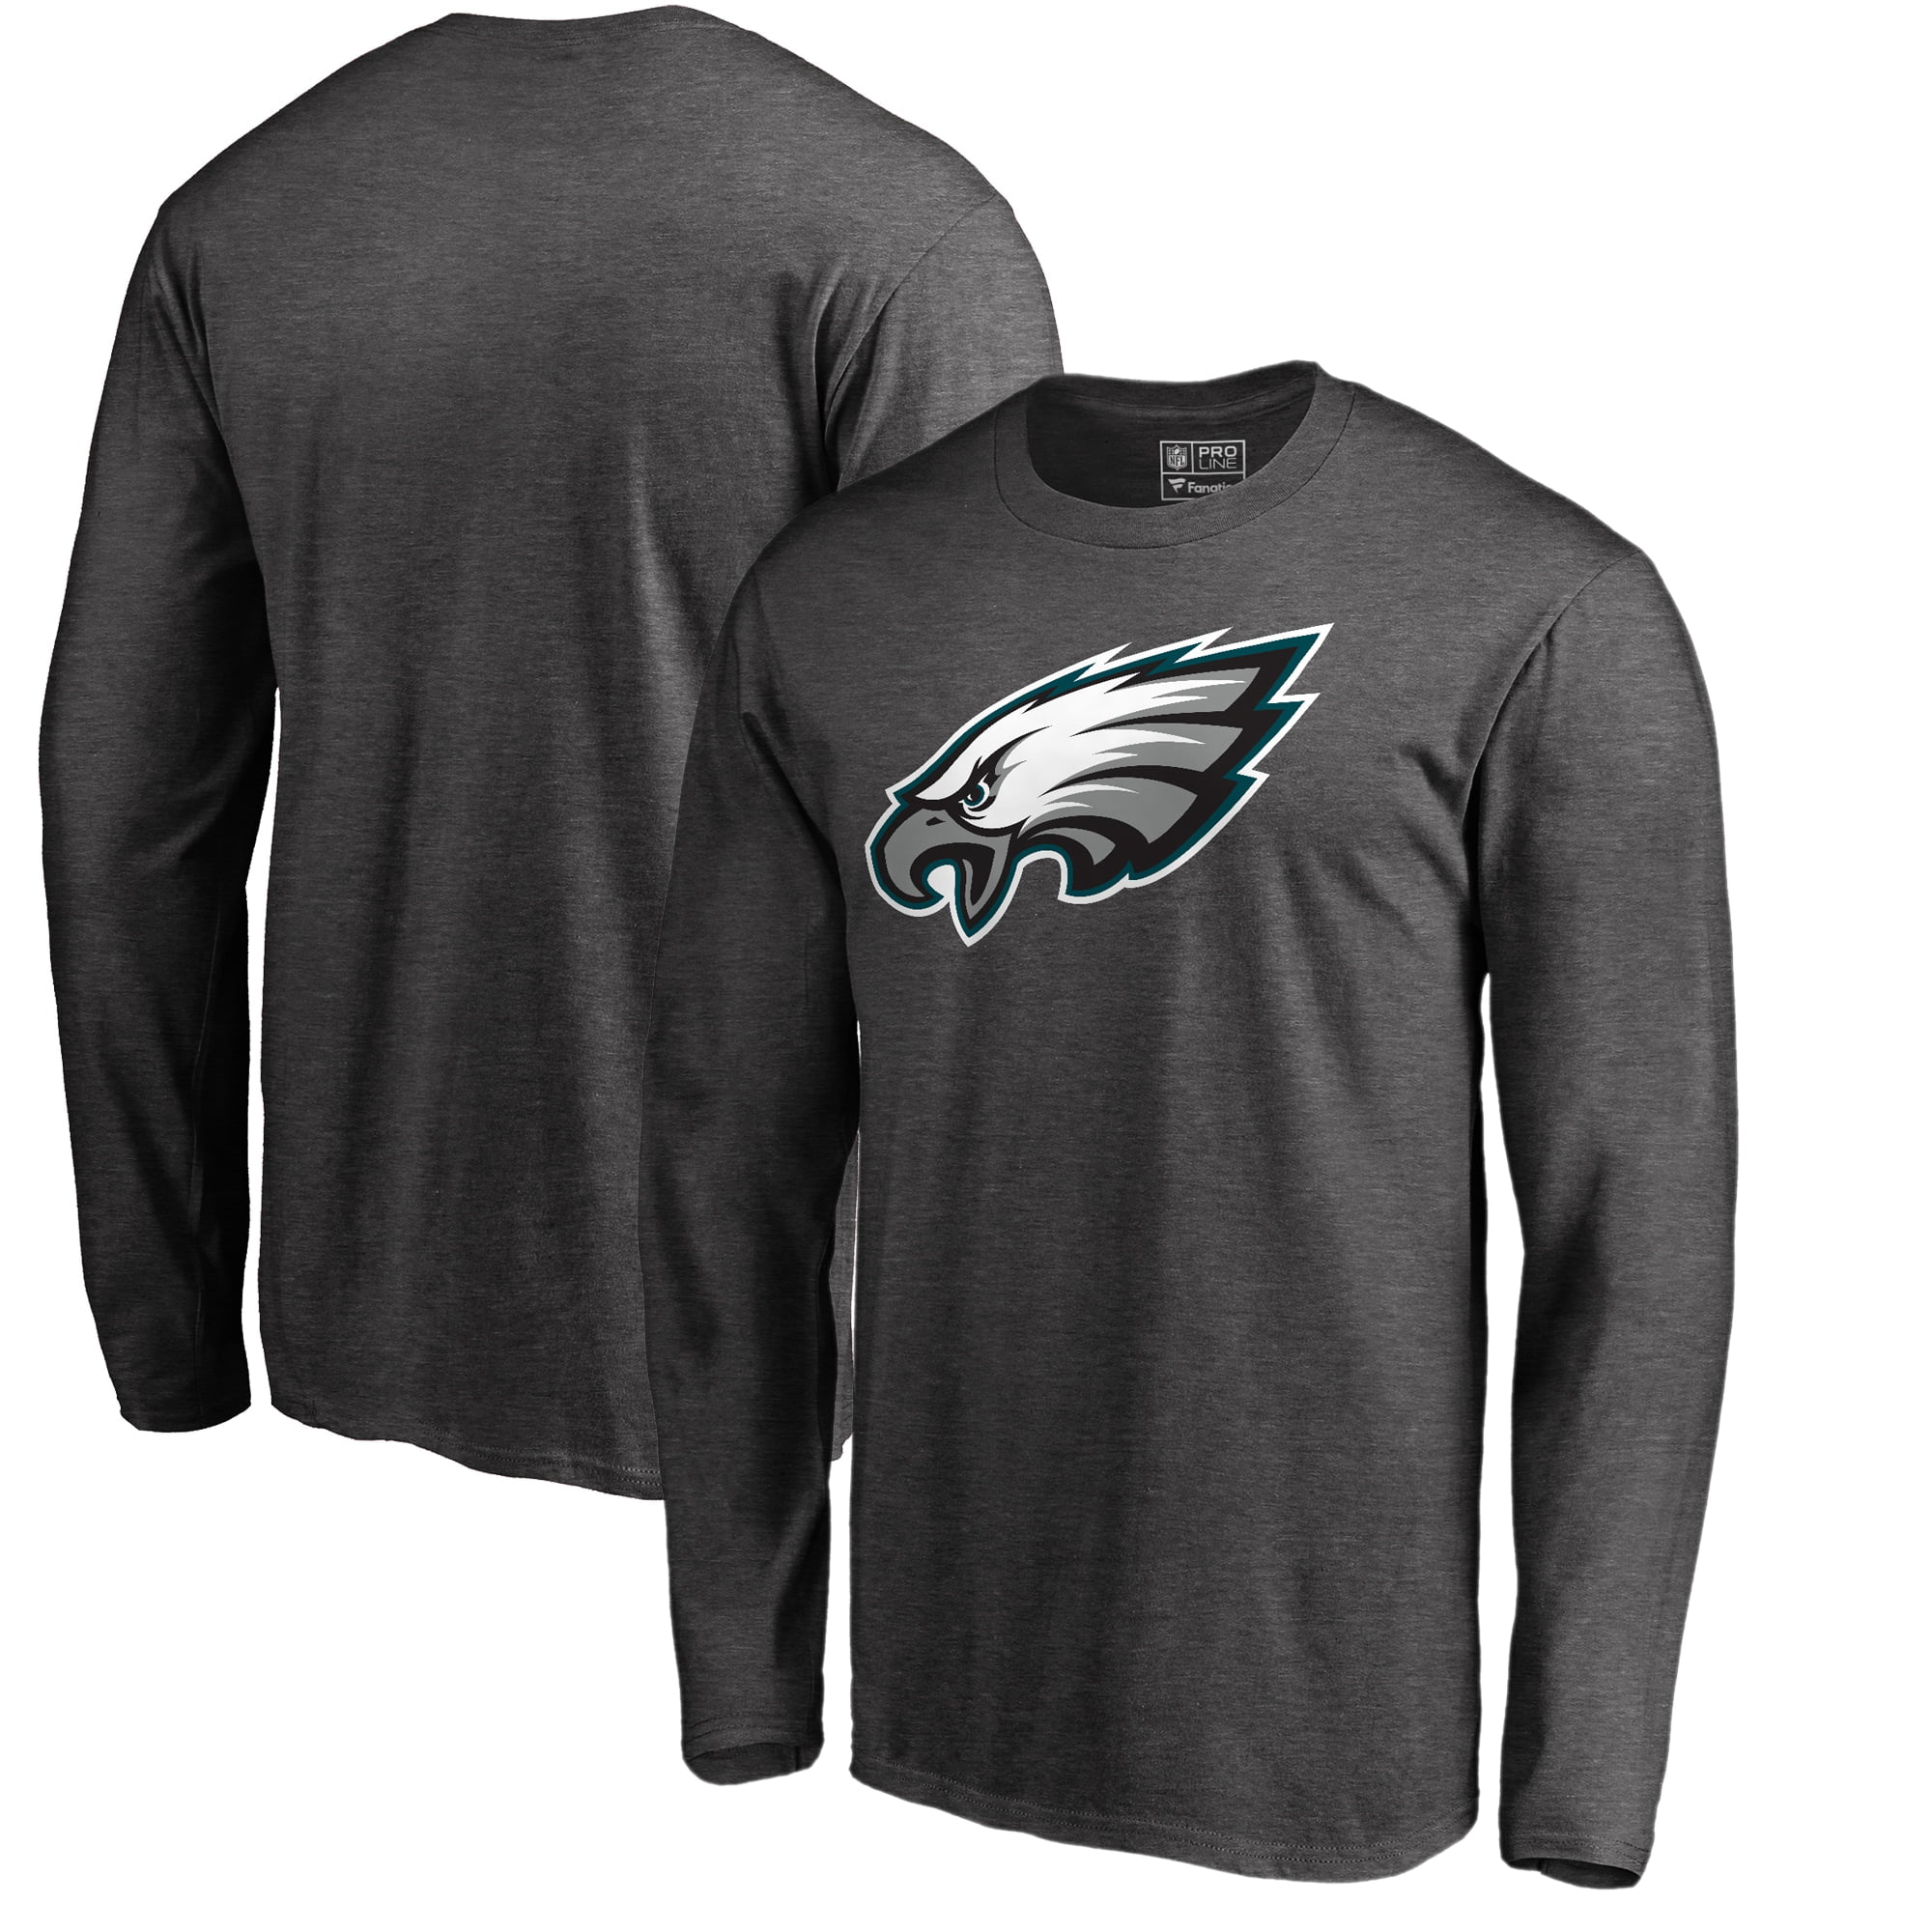 Mock Turtleneck Philadelphia Eagles long sleeve shirt New w/Tags NWT Proline. 